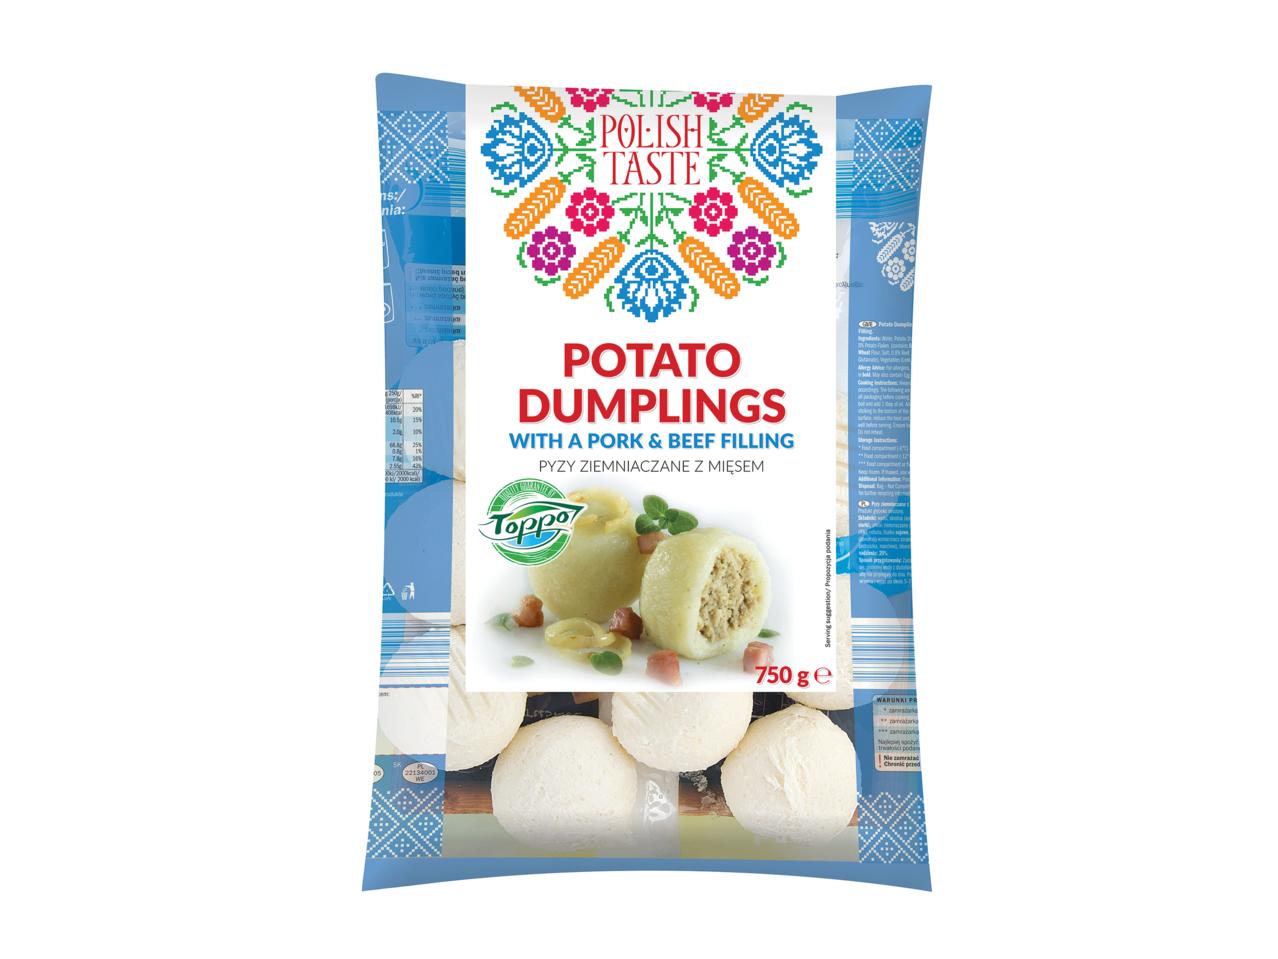 POLISH TASTE Dumplings/ Potato Dumplings